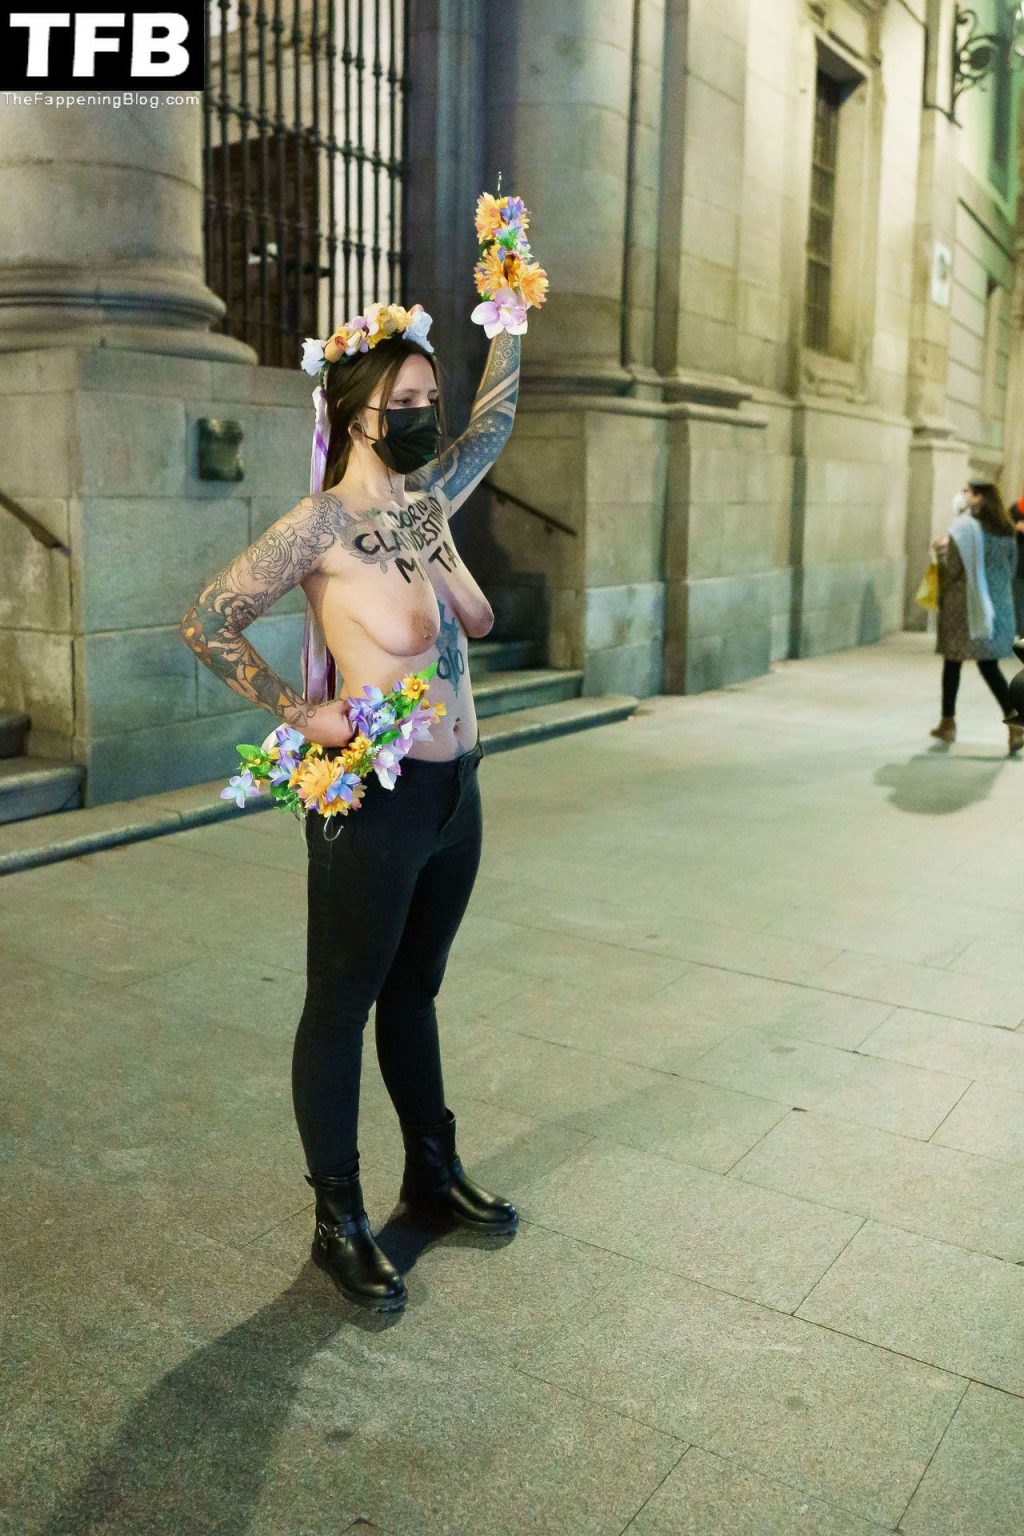 Femen Protests in Madrid (16 Nude Photos)